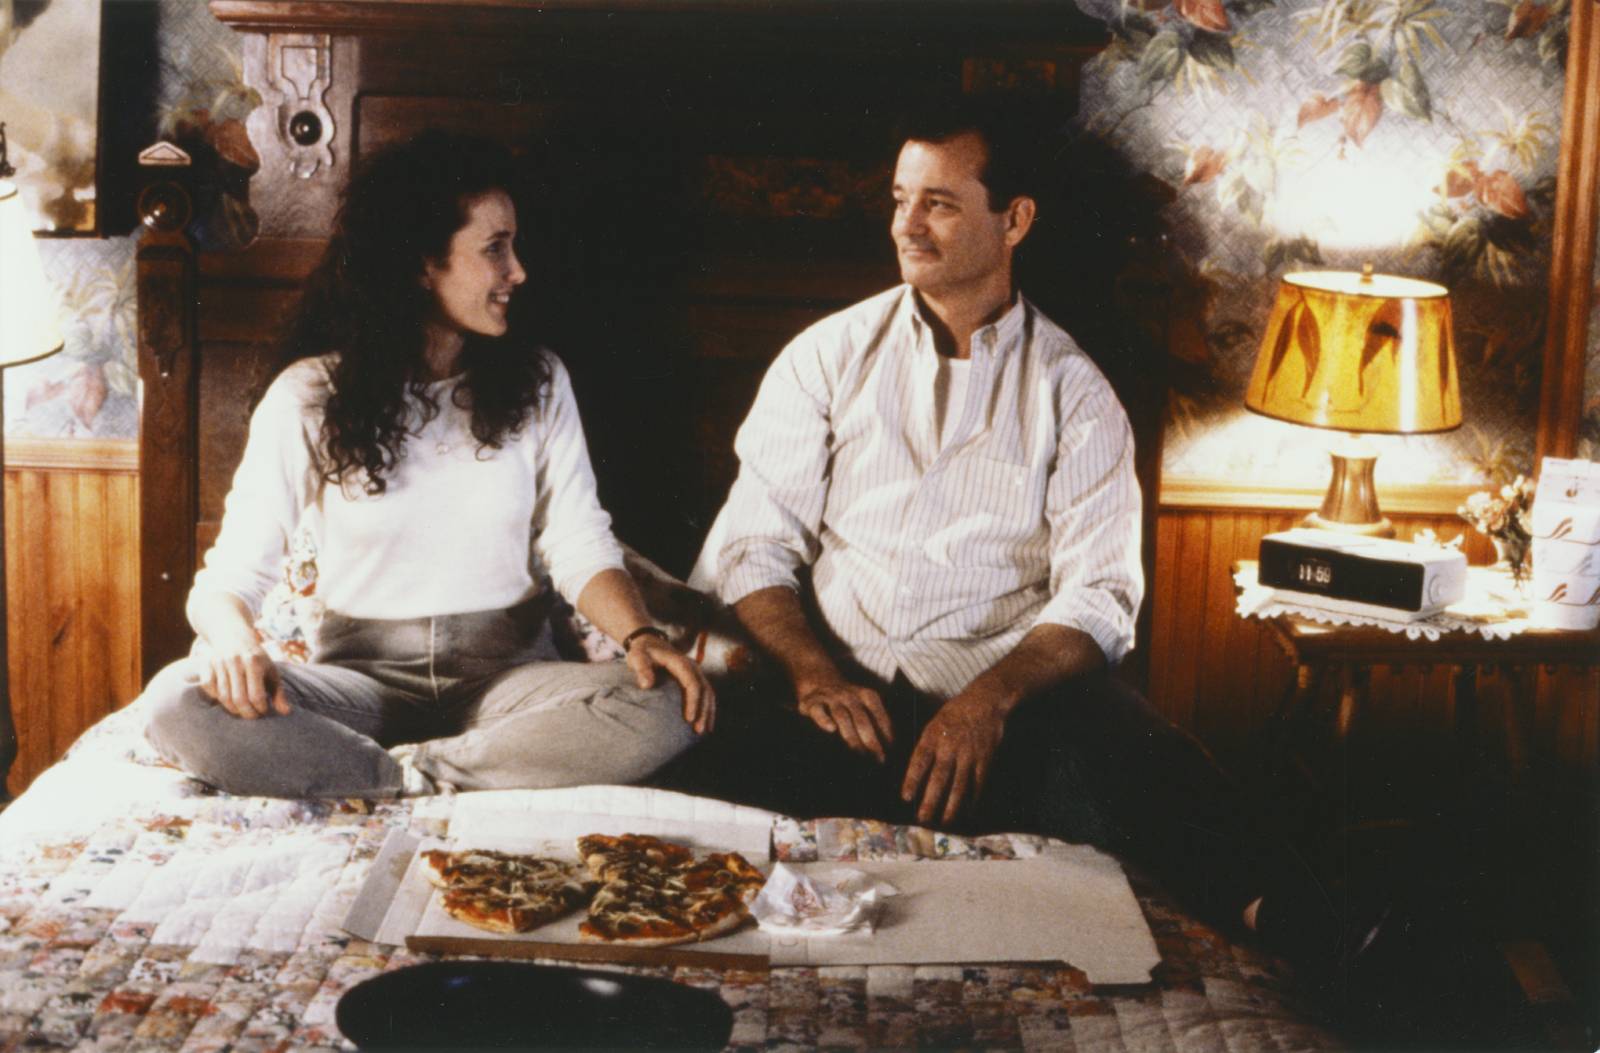 Un jour sans fin - Andie MacDowell et Bill Murray © Columbia Pictures Industries